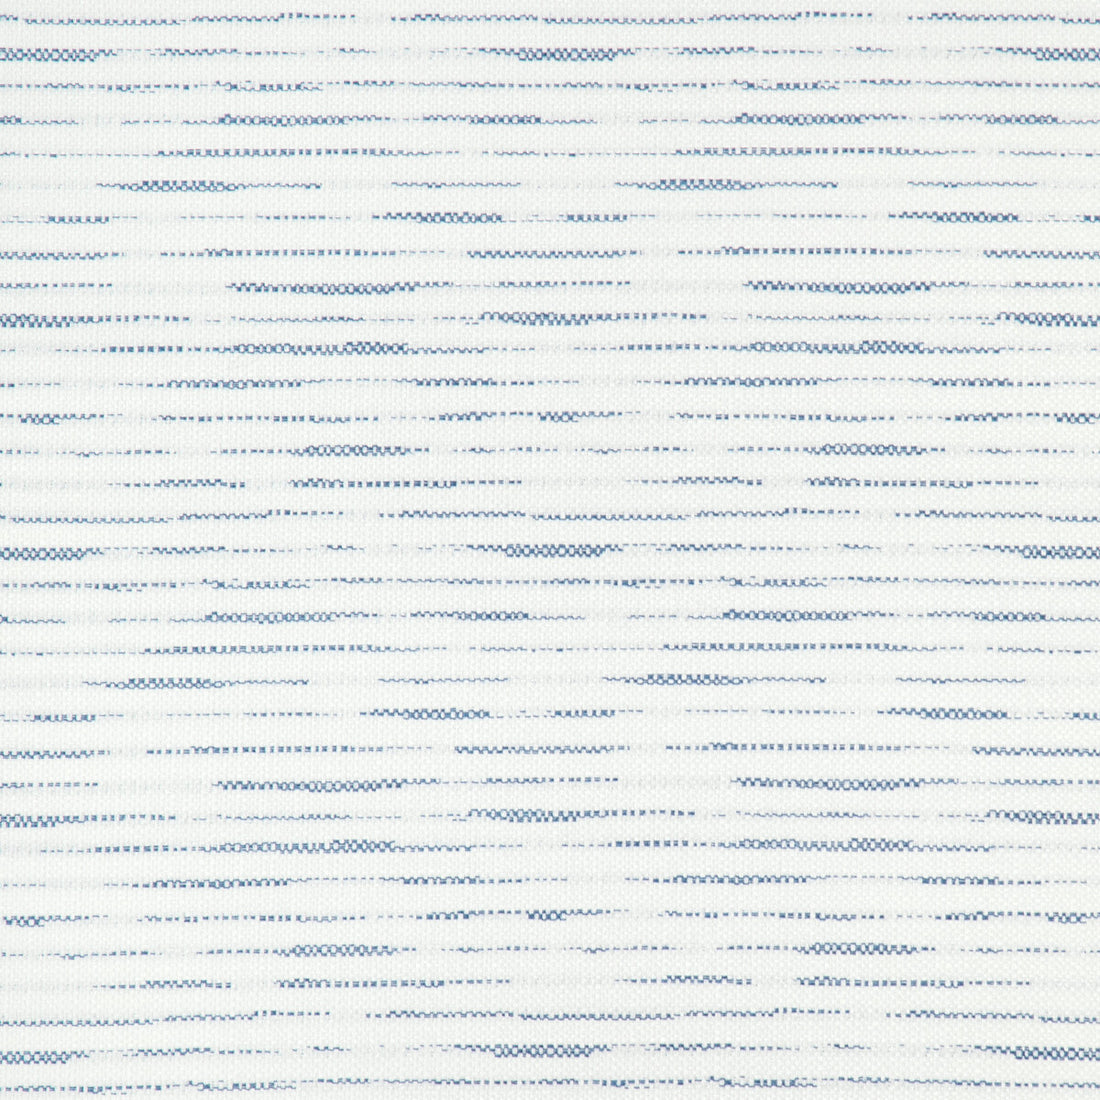 Kravet Design fabric in 36797-51 color - pattern 36797.51.0 - by Kravet Design in the Sea Island Indoor/Outdoor collection